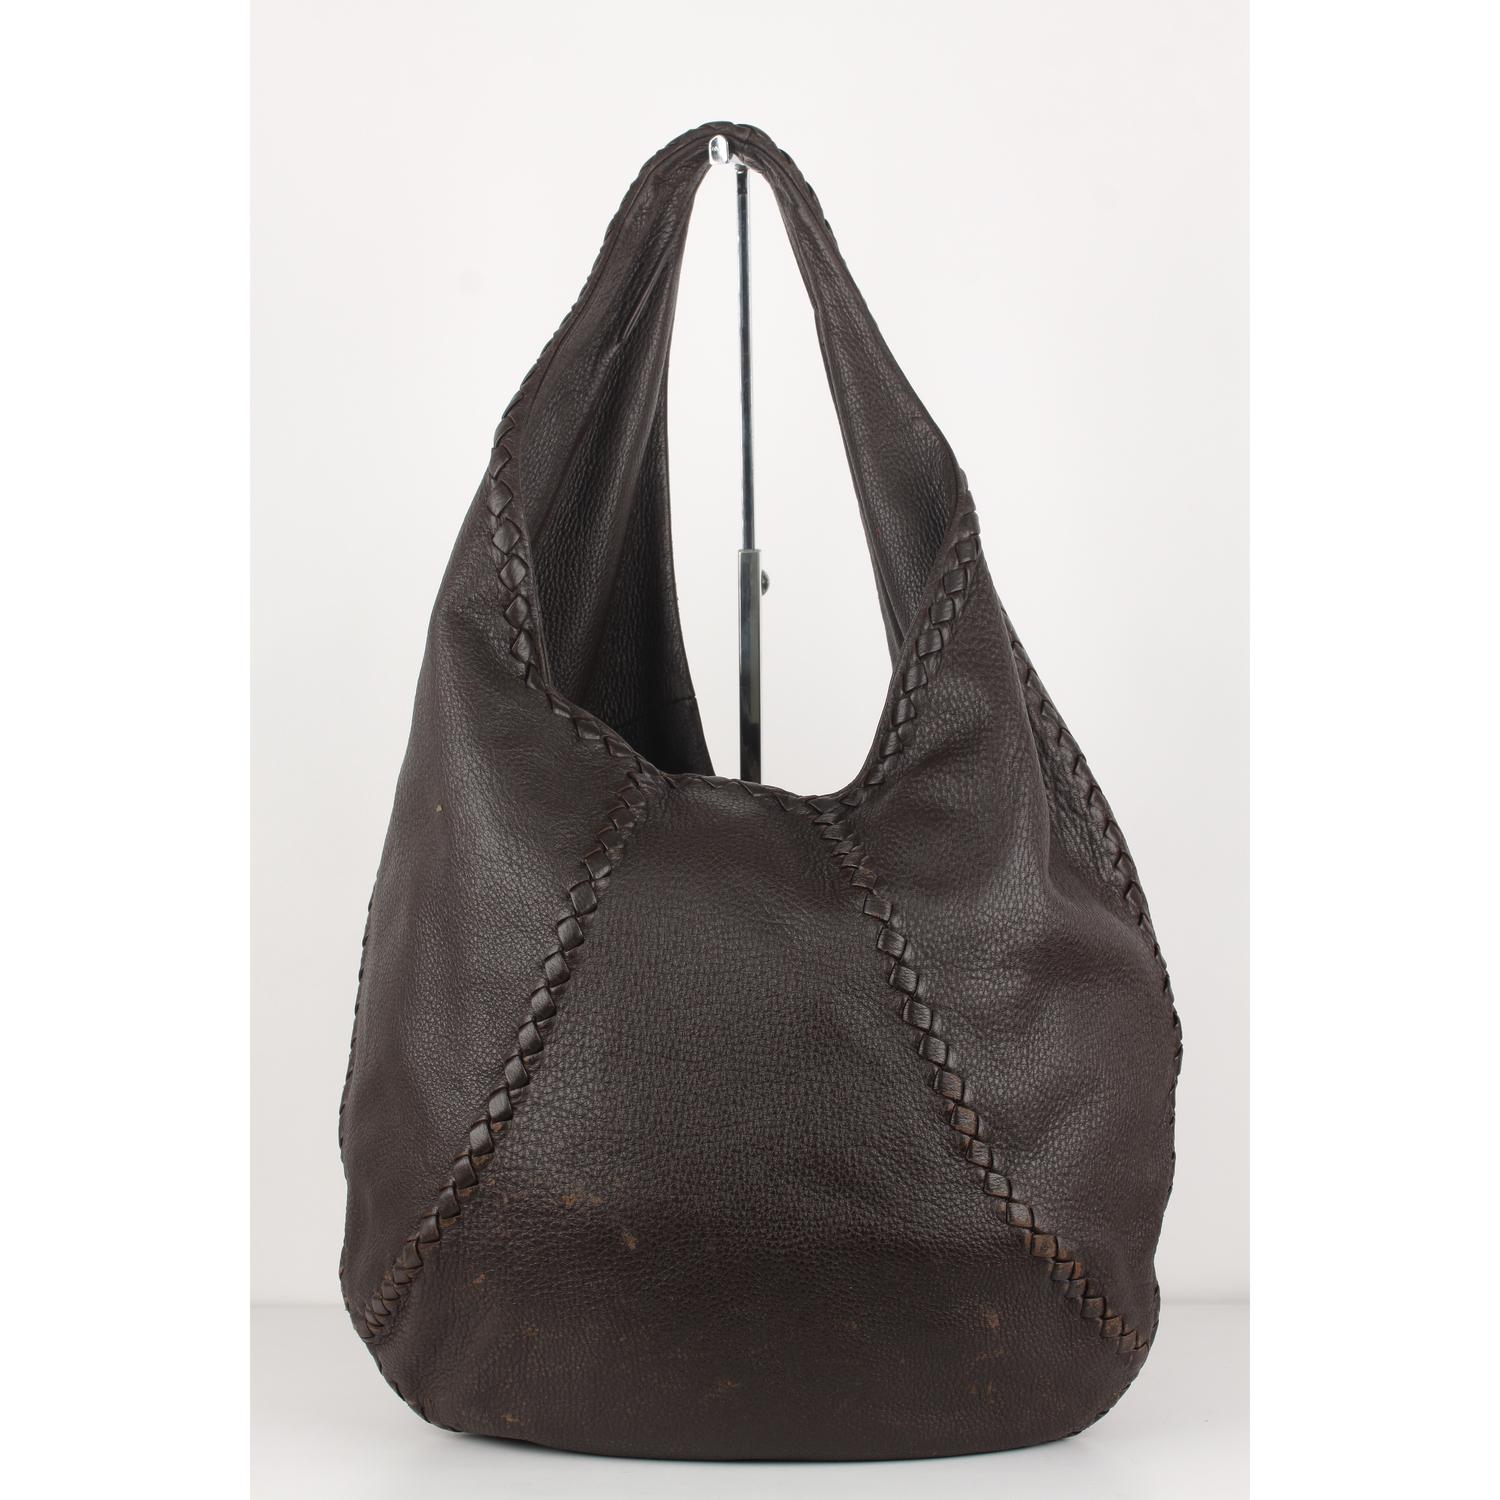 Bottega Veneta Brown Leather Baseball Hobo Shoulder Bag

Material : Leather 
Color : Brown
Model : Hobo
Gender : Women
Country of Manufacture : Italy
Size : Medium
Bag Depth : 1.5 inches - 3,8 cm 
Bag Height : 14 inches - 35.5 cm
Bag Length : 16.5